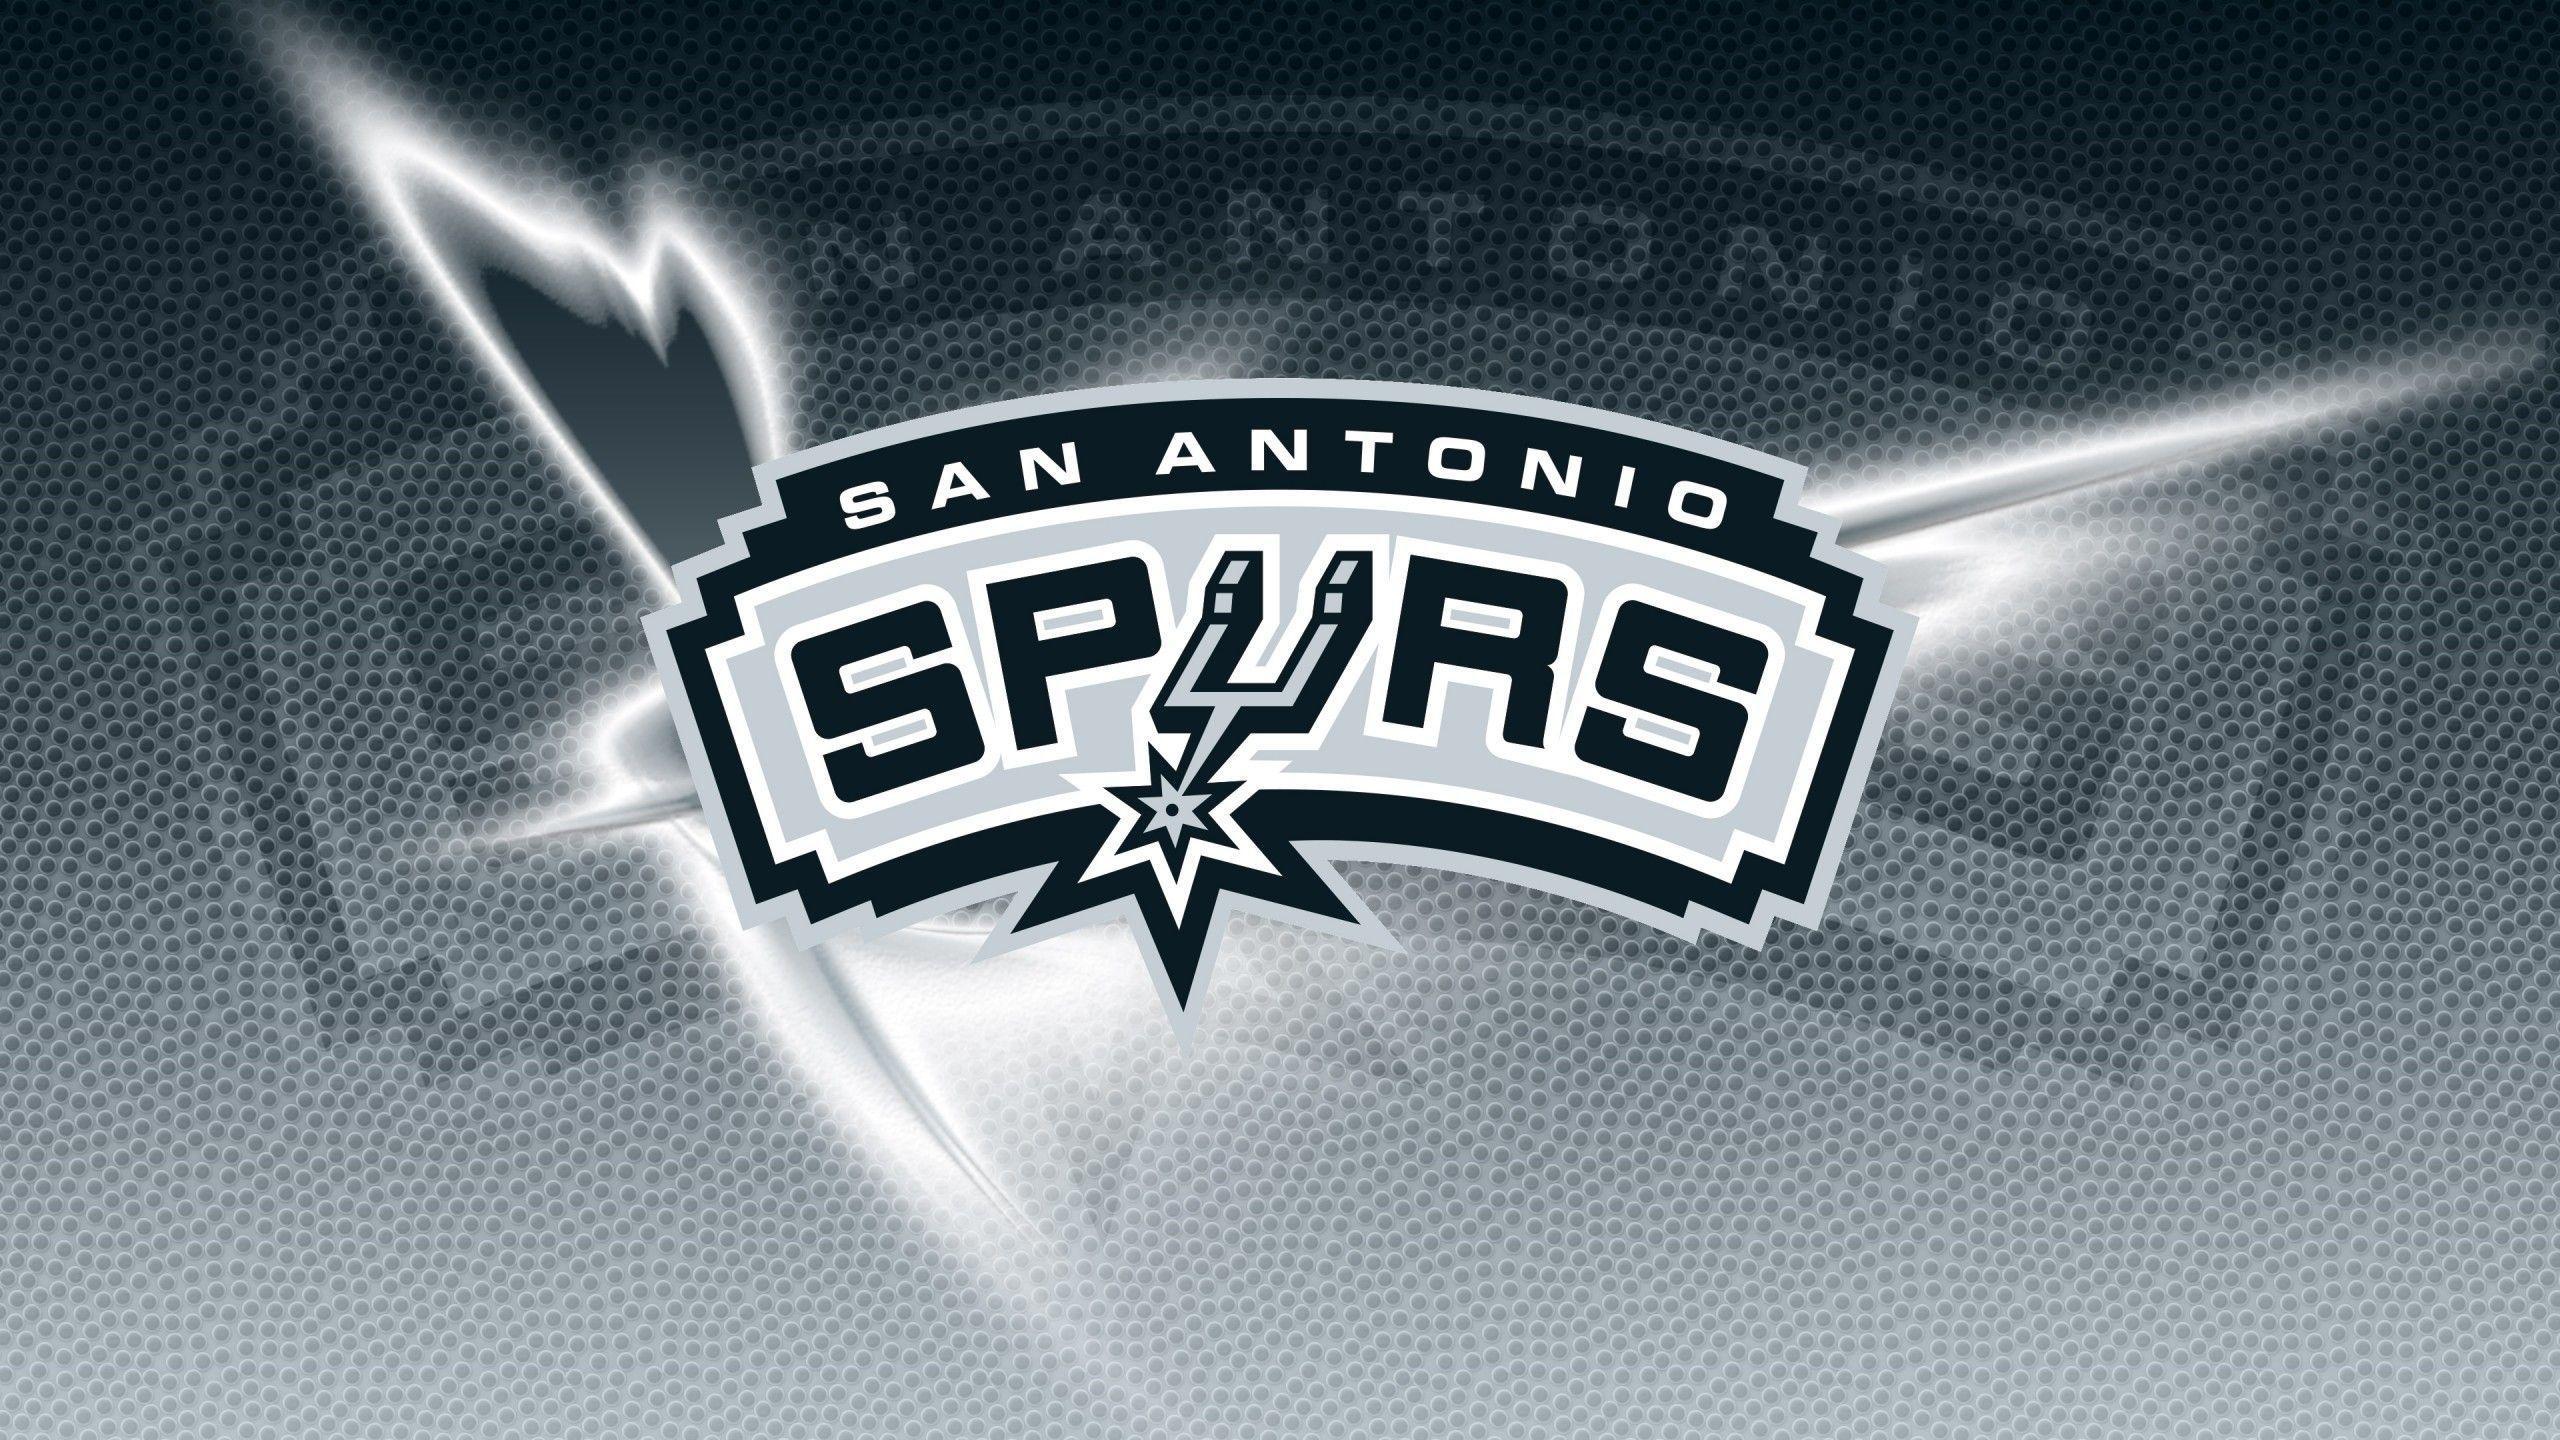 NBA San Antonio Spurs Logo wallpaper HD 2016 in Basketball